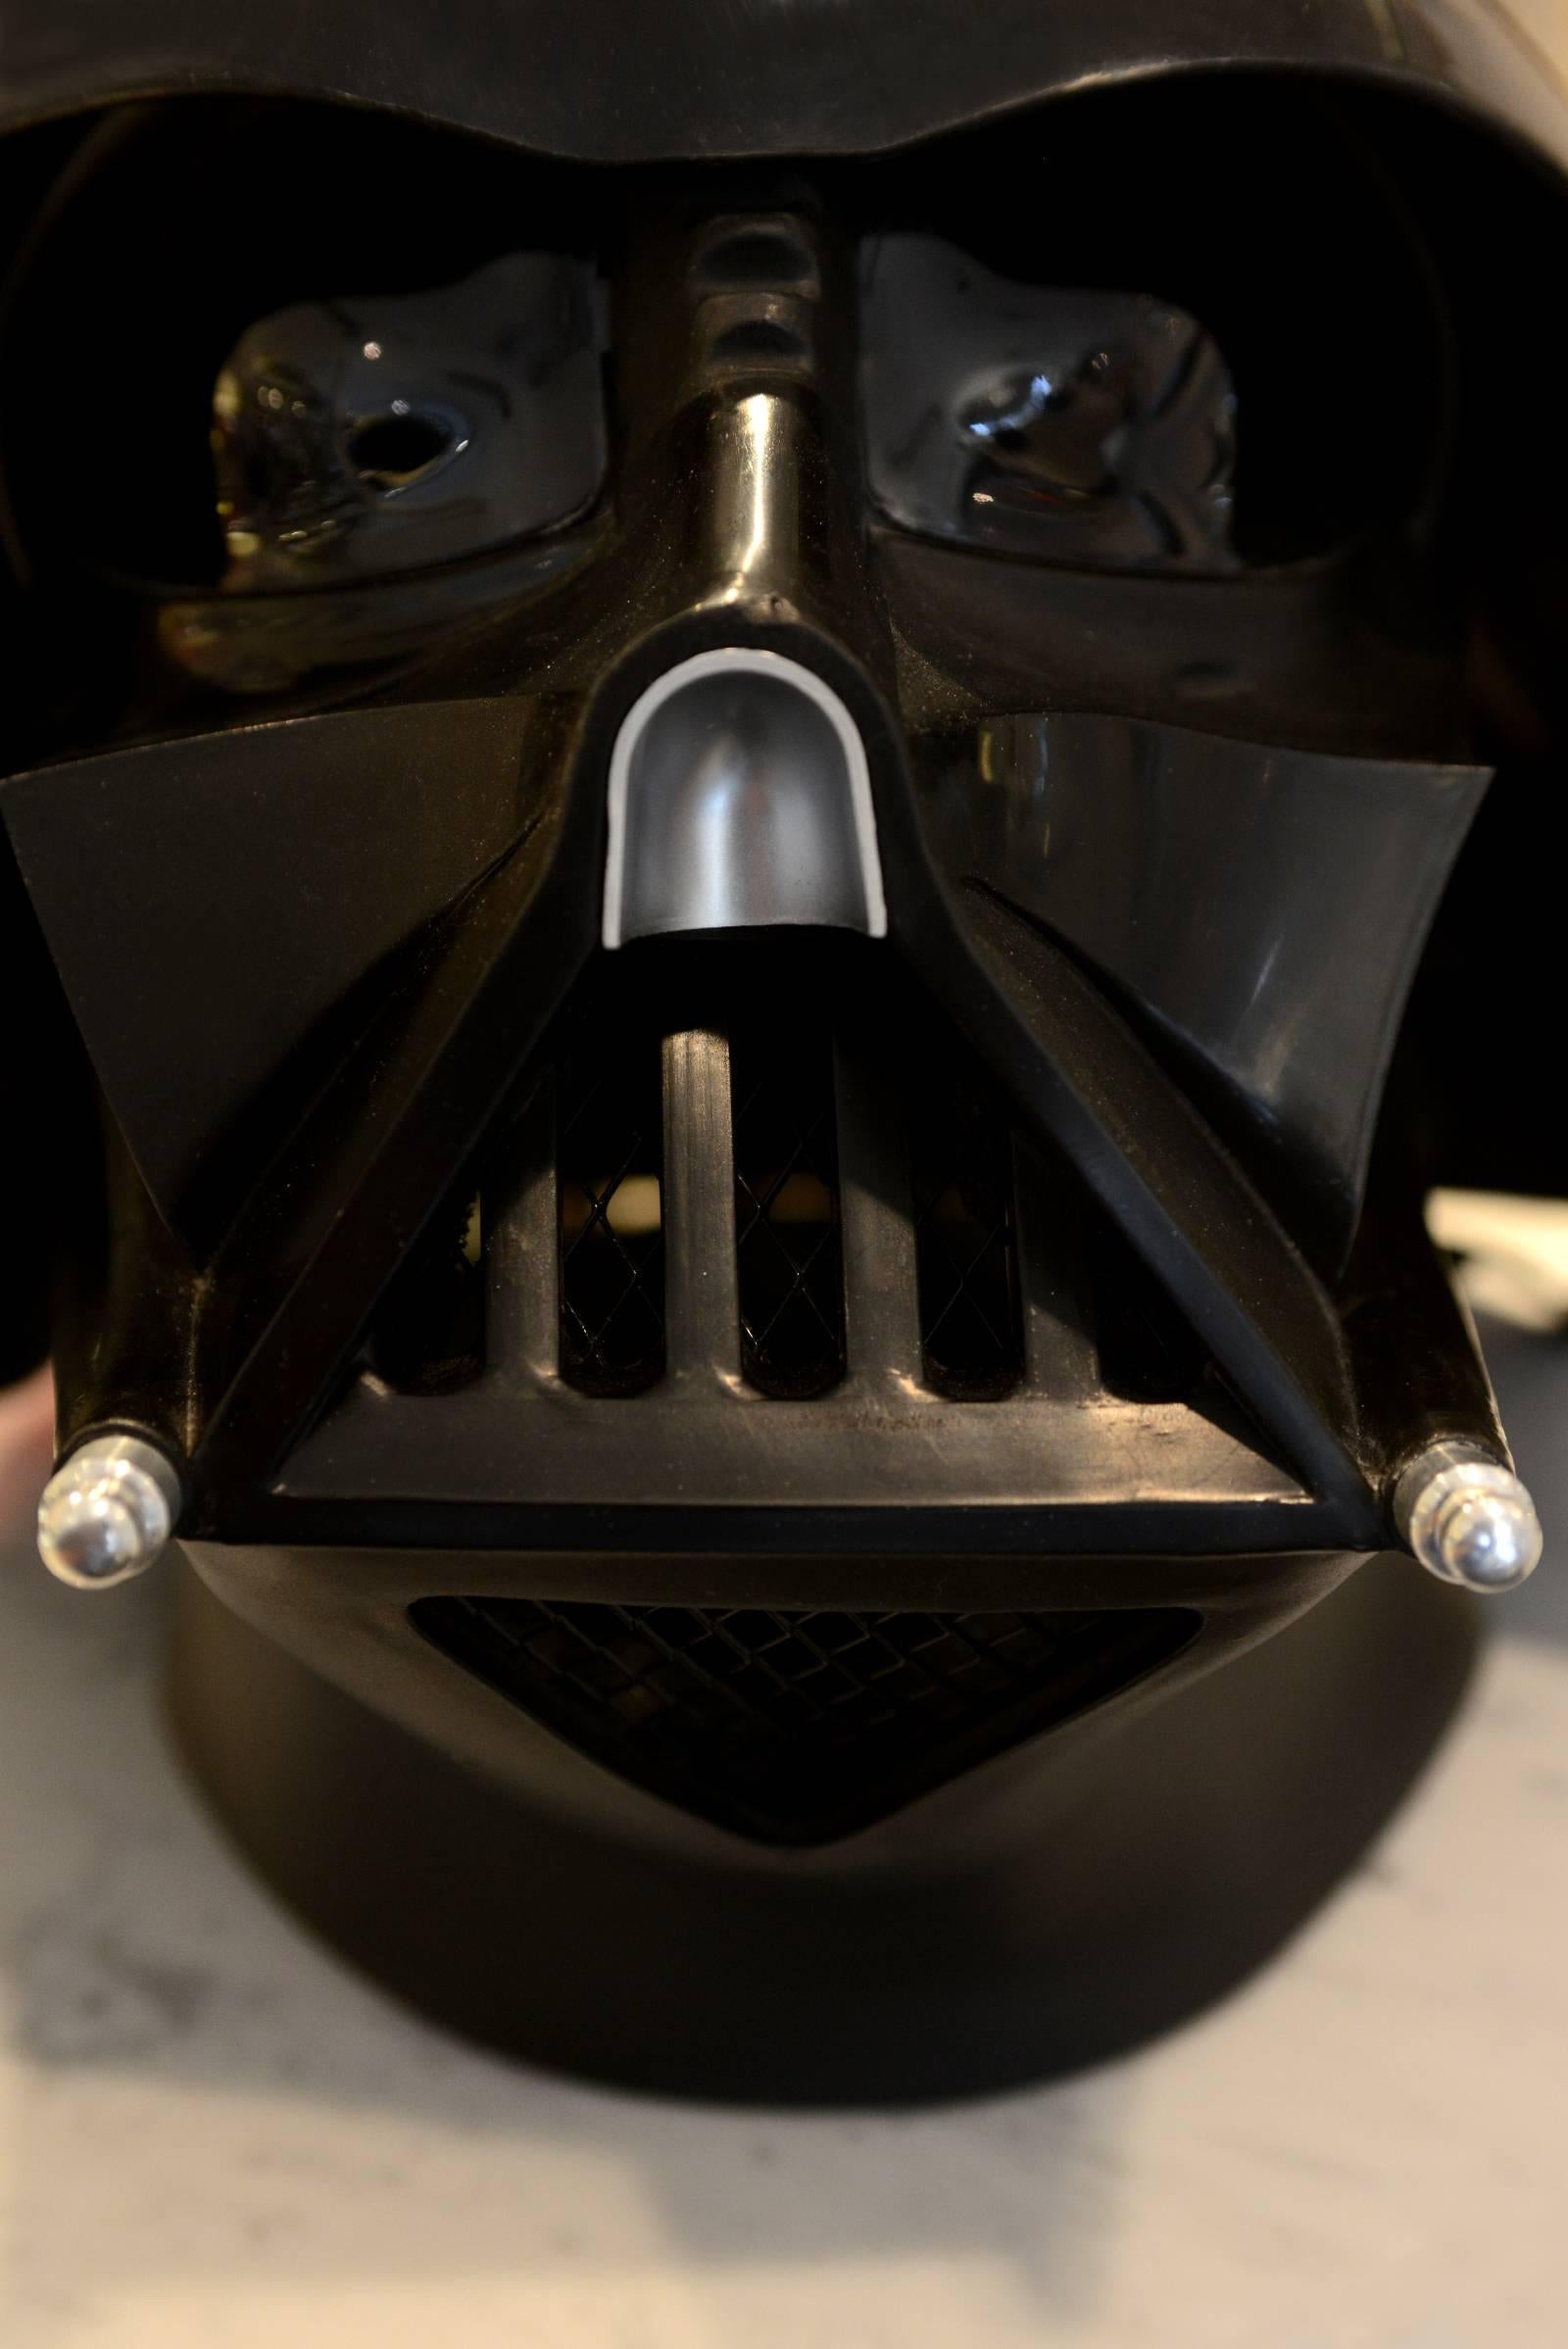 Helmet star wars dark Vador,
Actual size, exceptional piece in resin.
